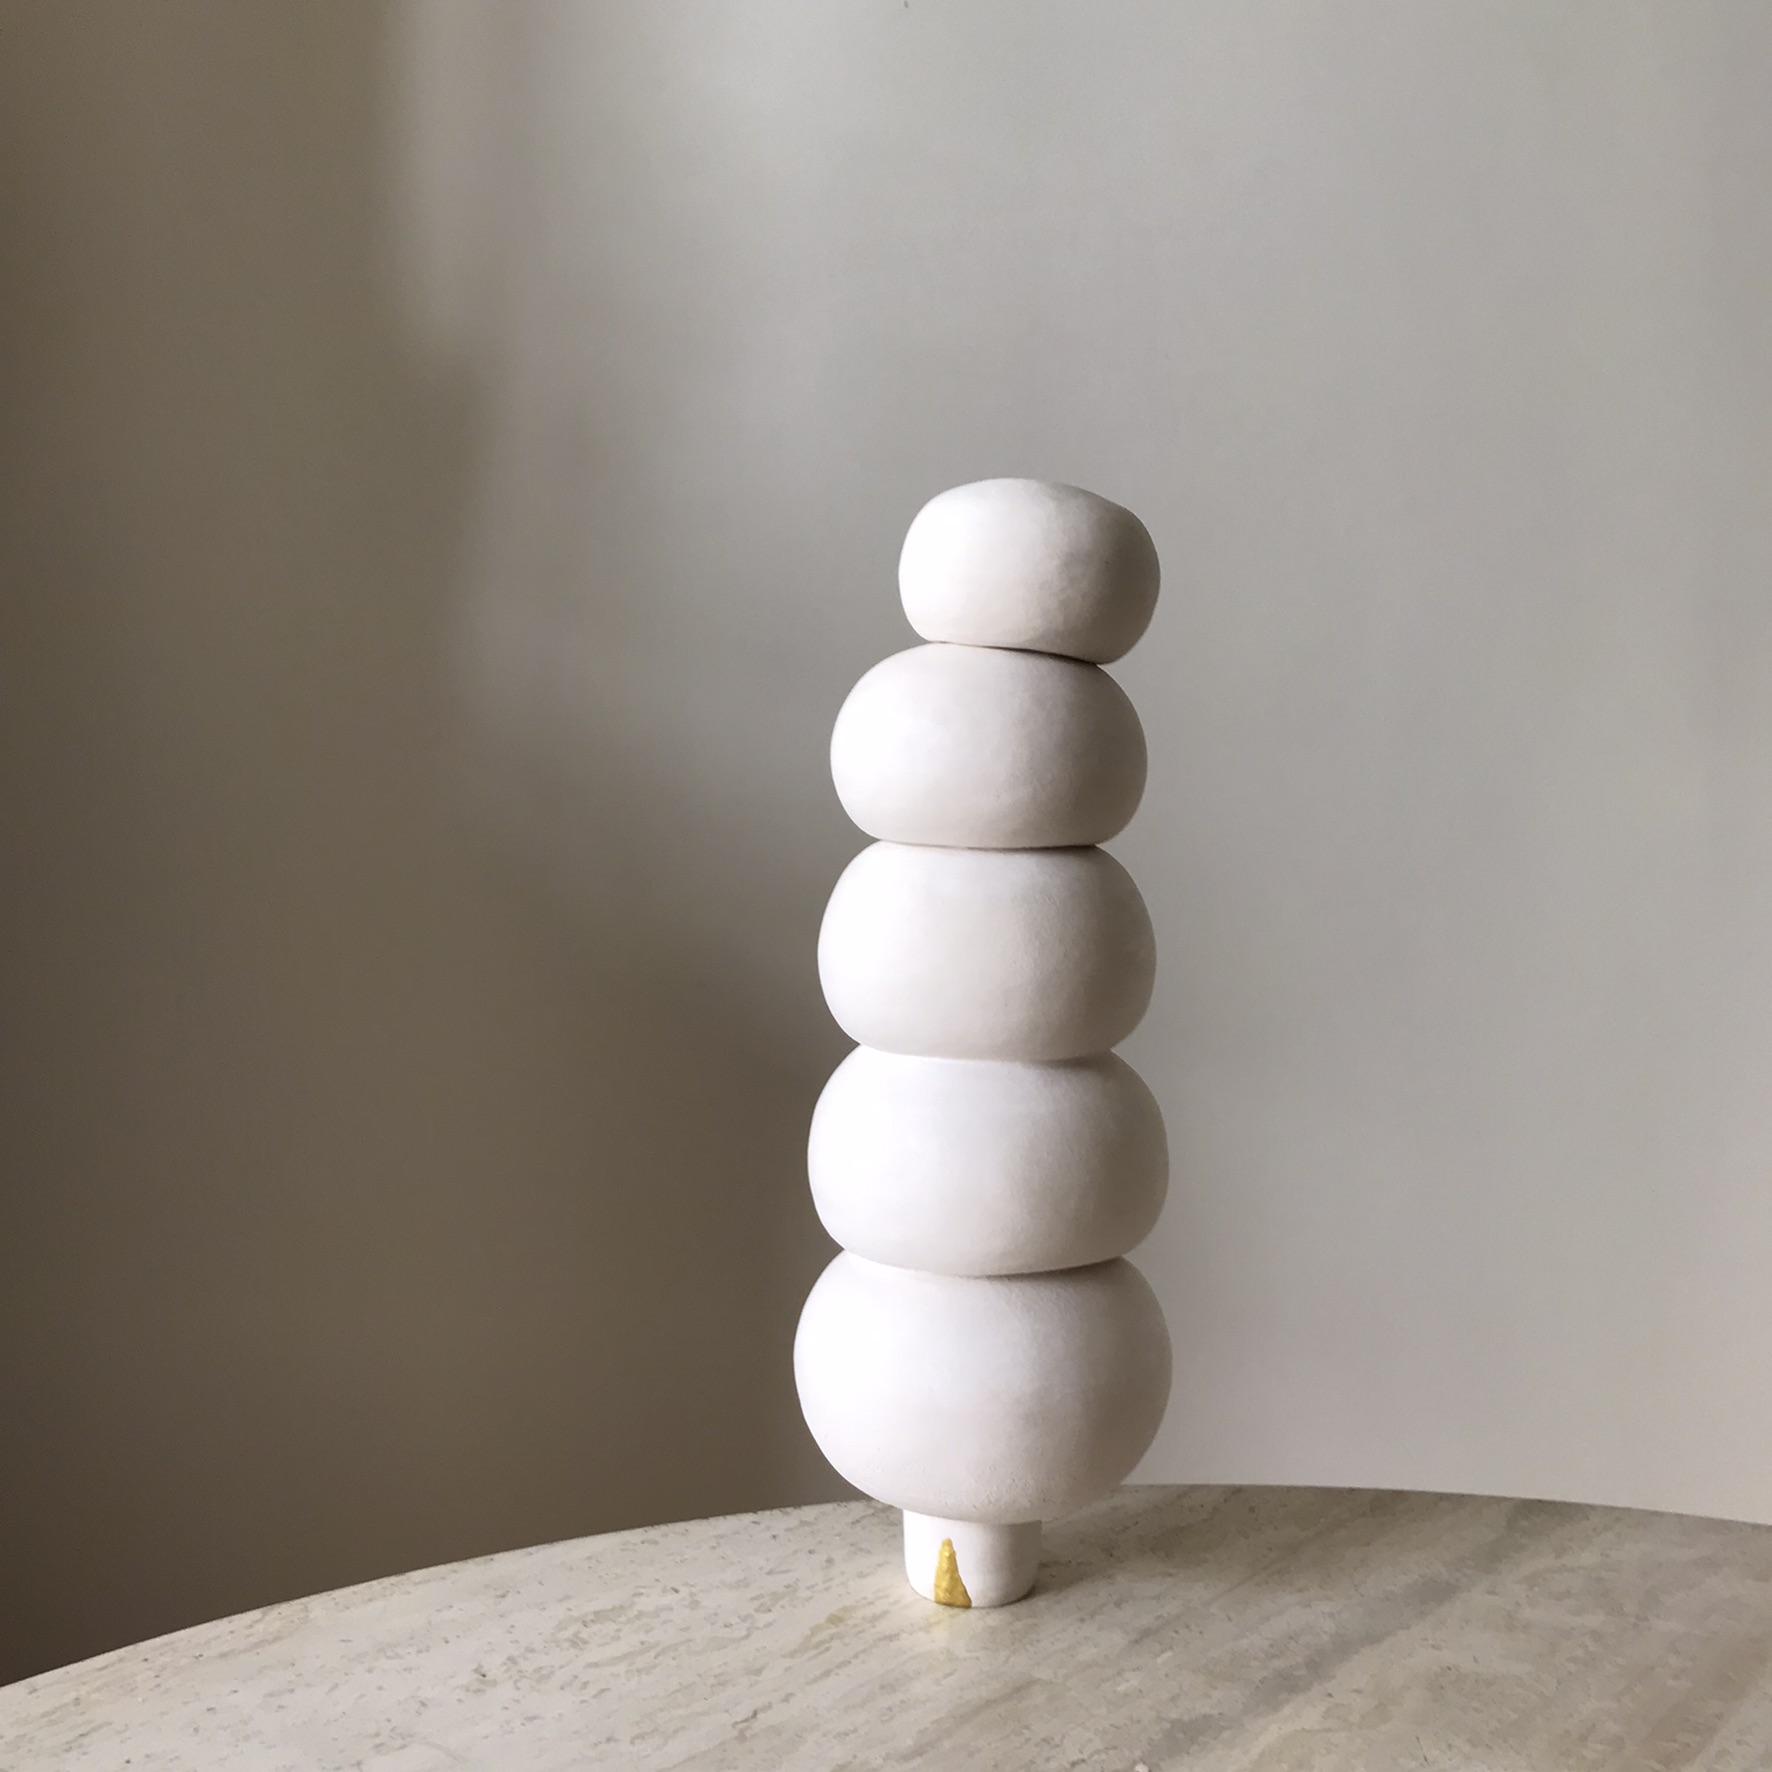 Modder Balancing by Françoise Jeffrey